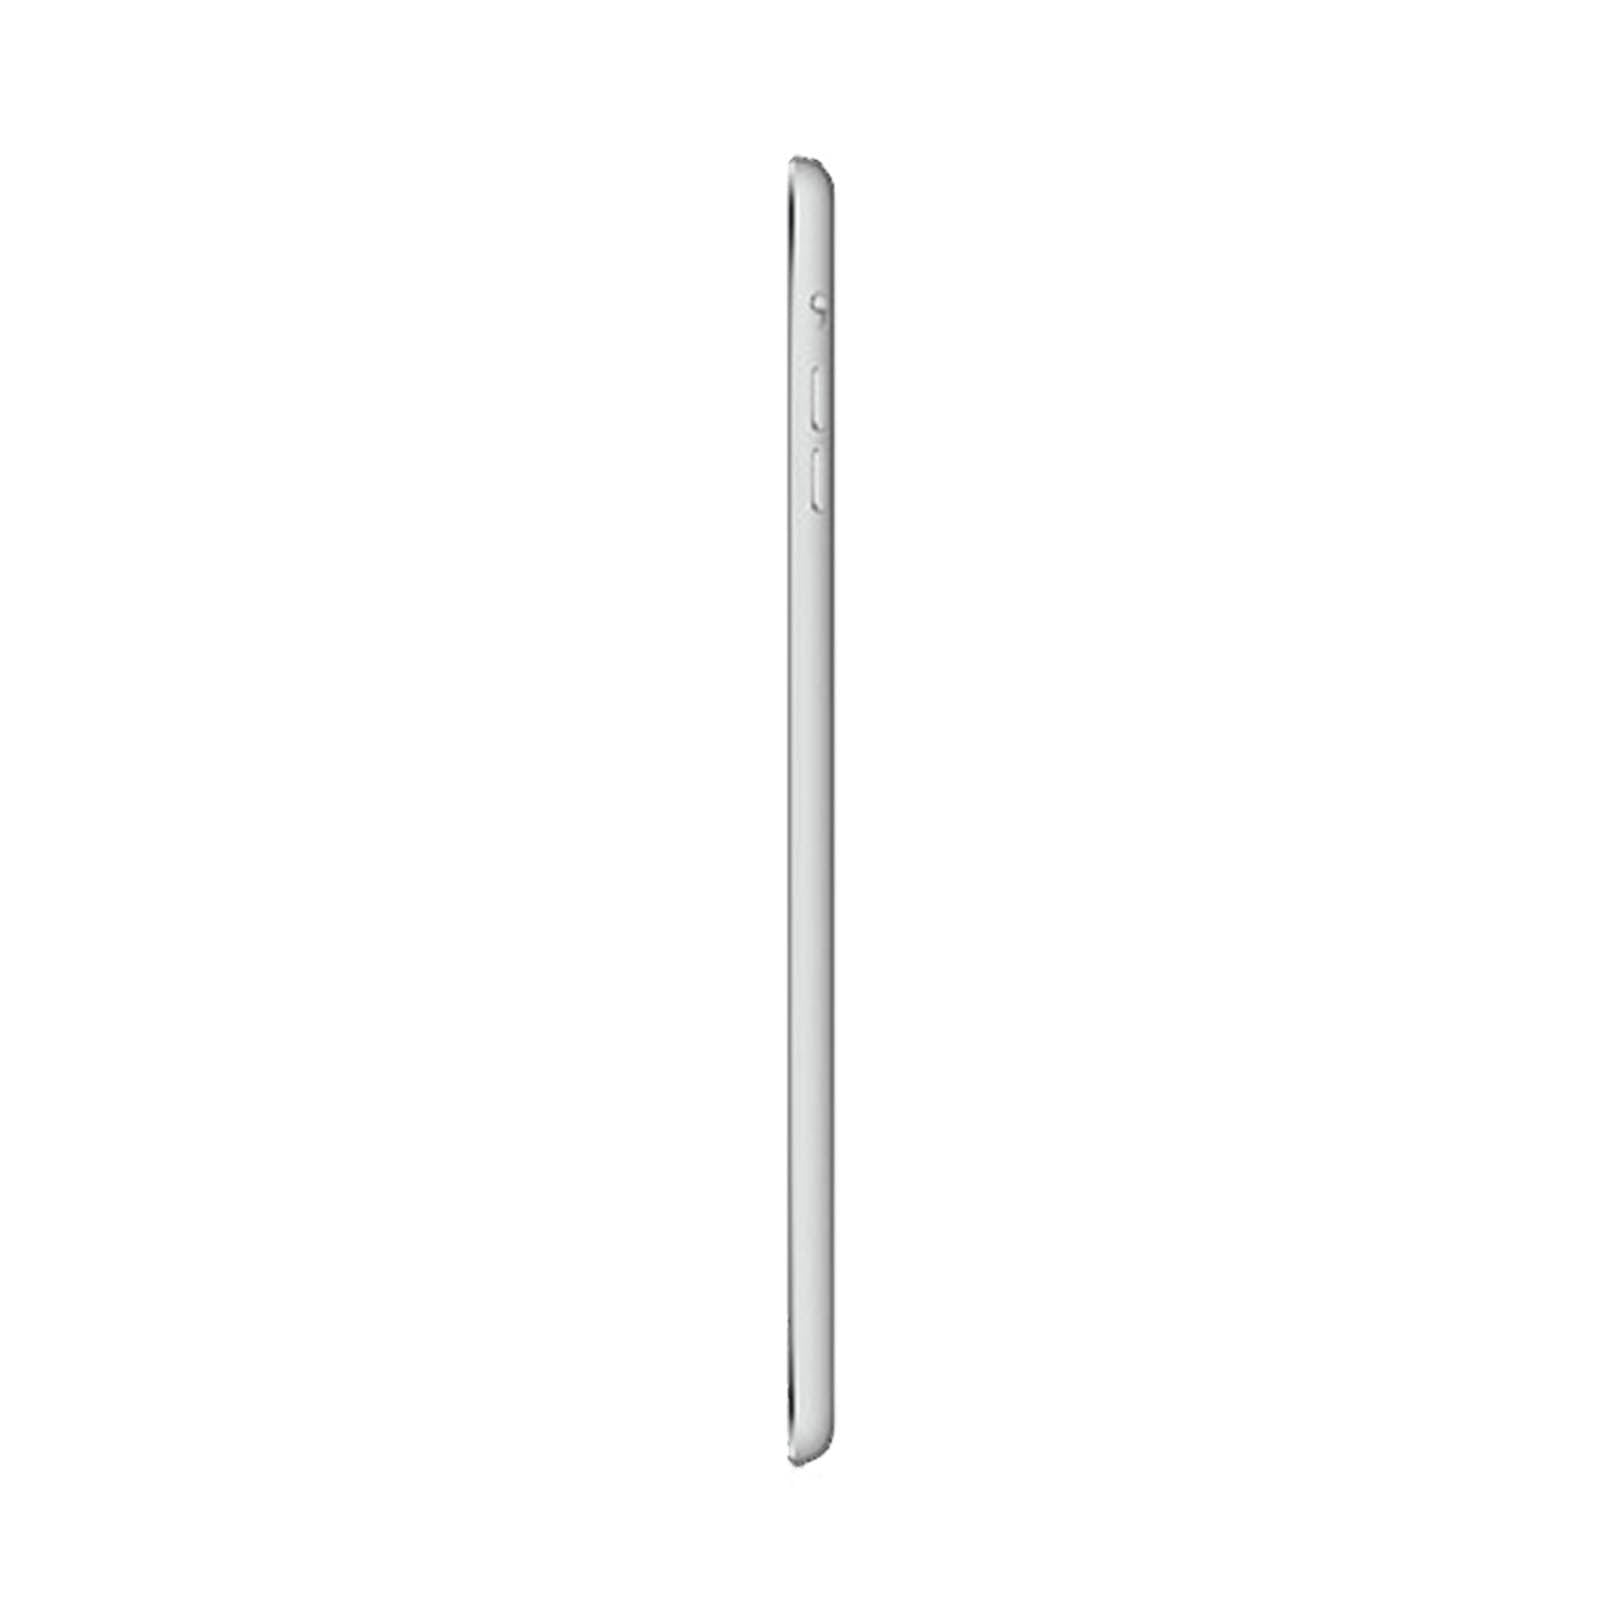 Apple iPad mini 2 16GB White Very Good - Unlocked